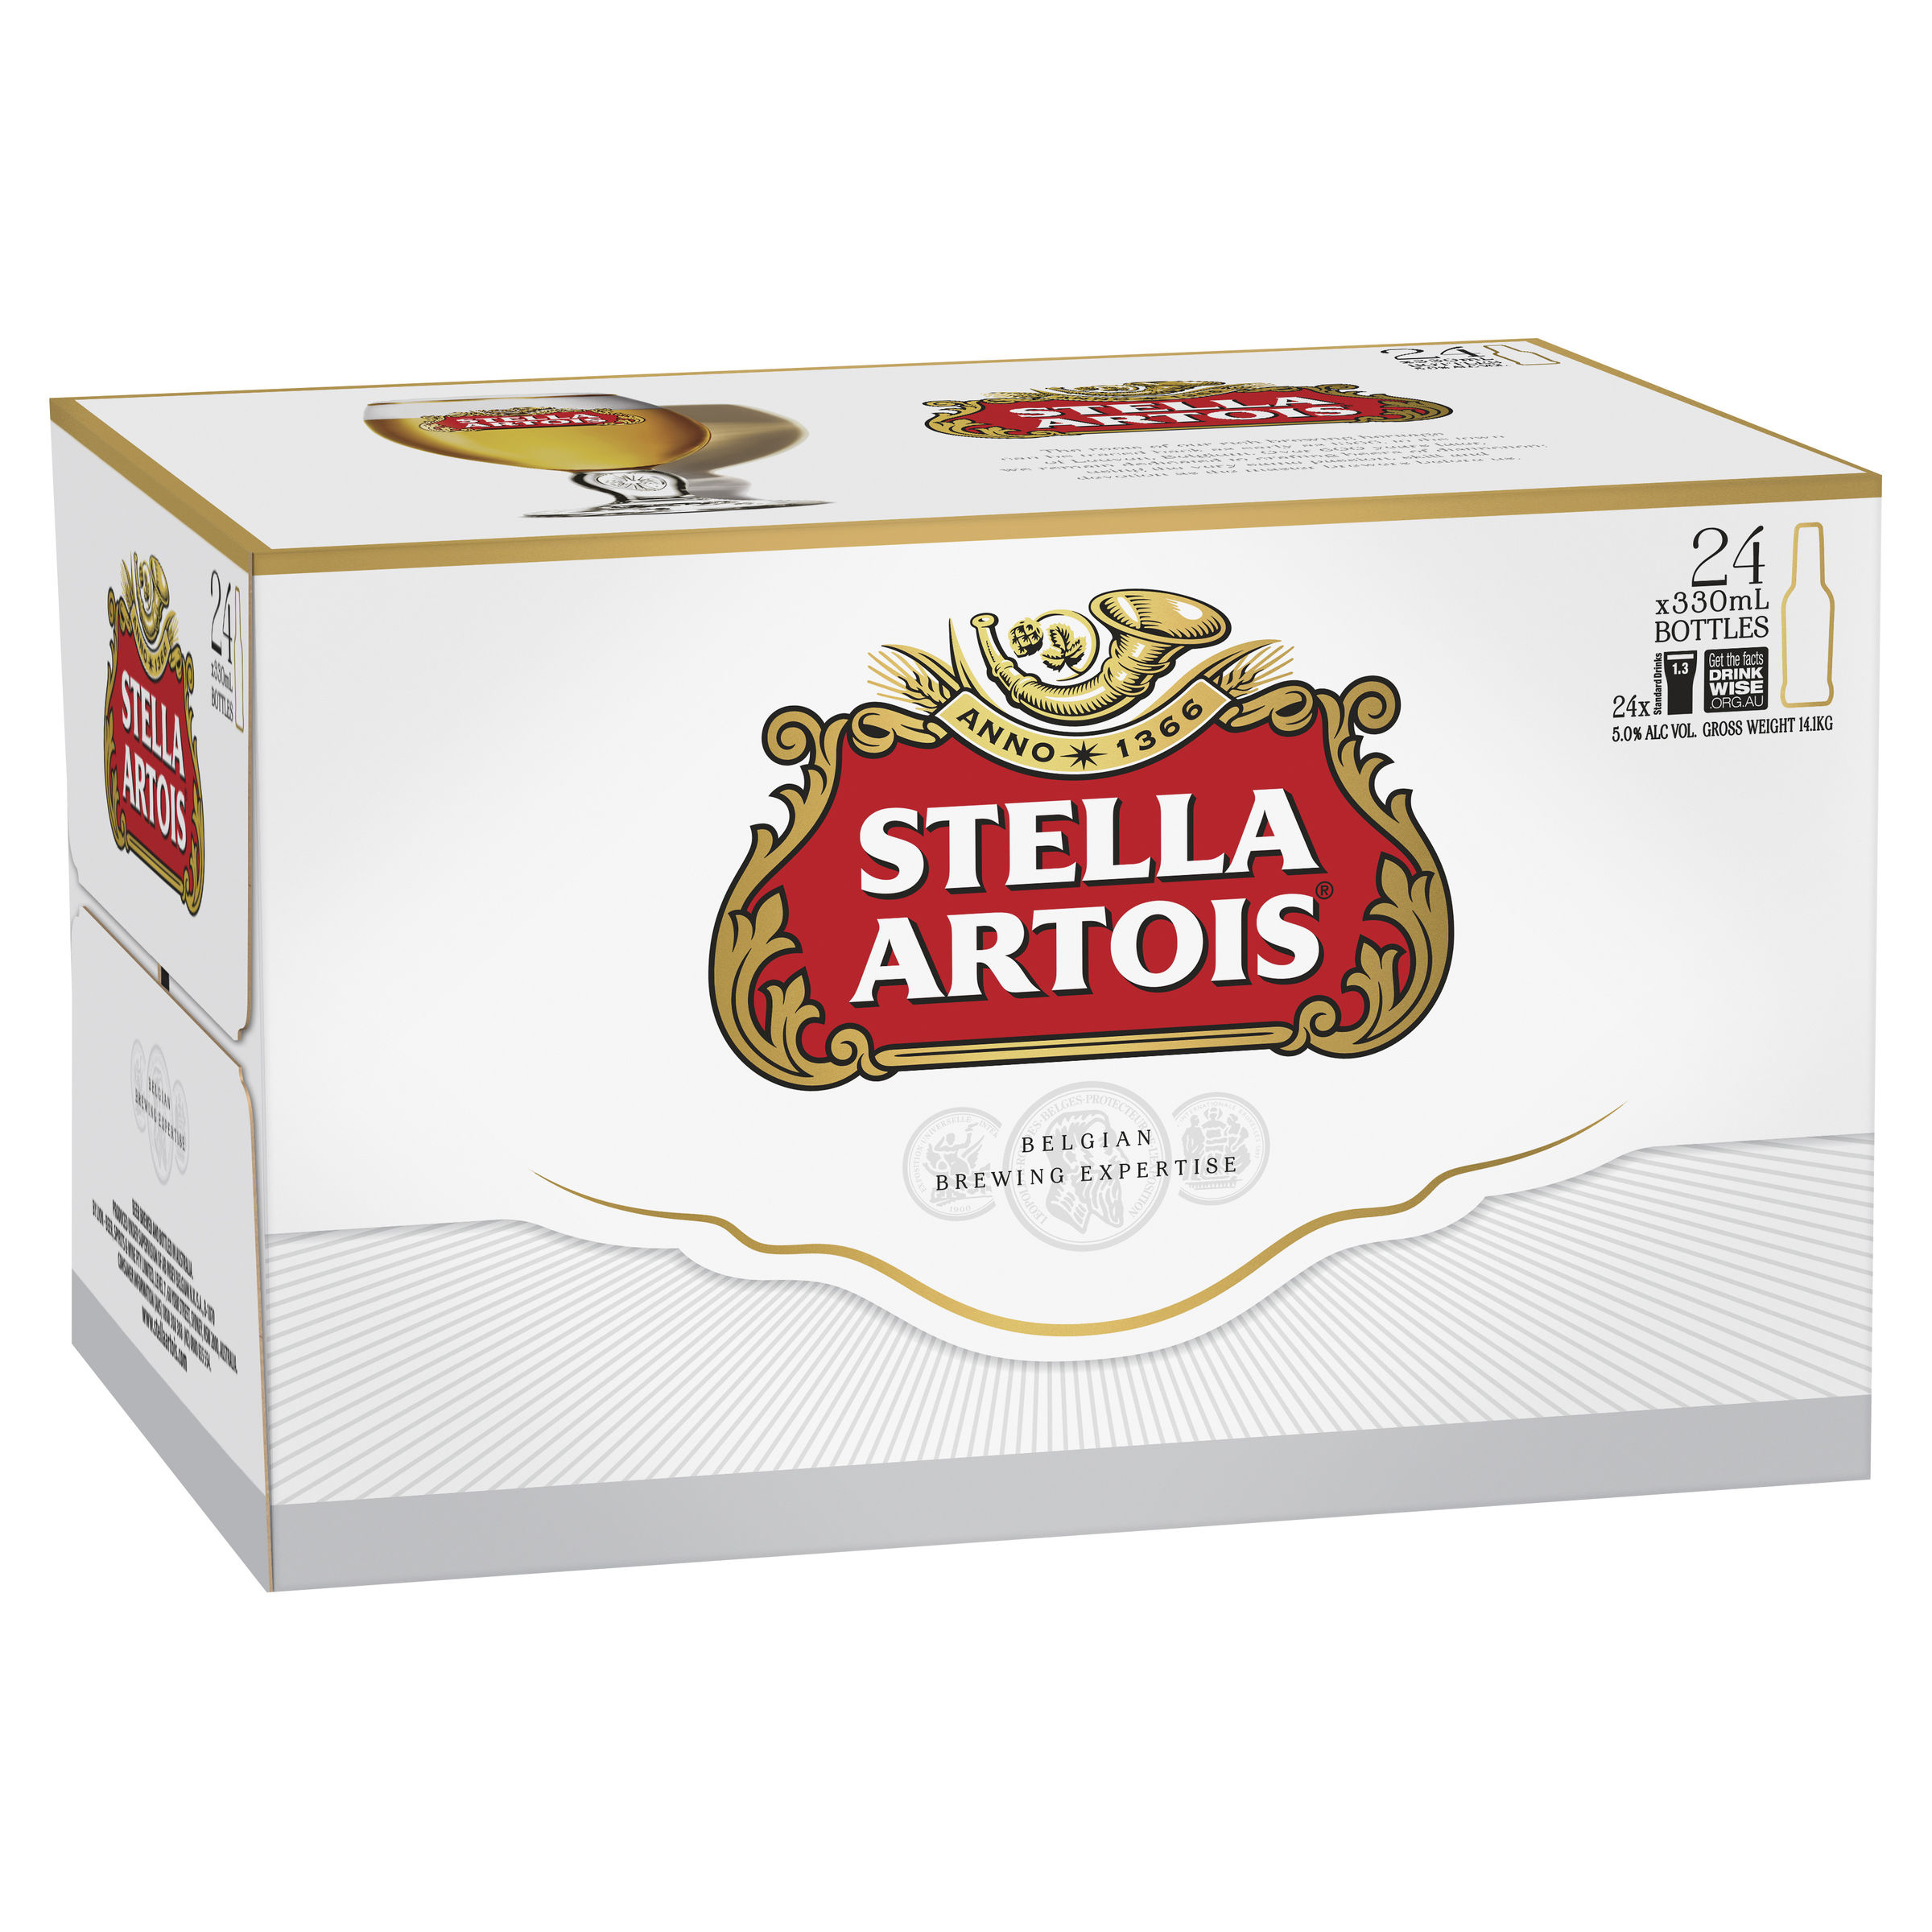 STELLA ARTOIS - Value Cellars